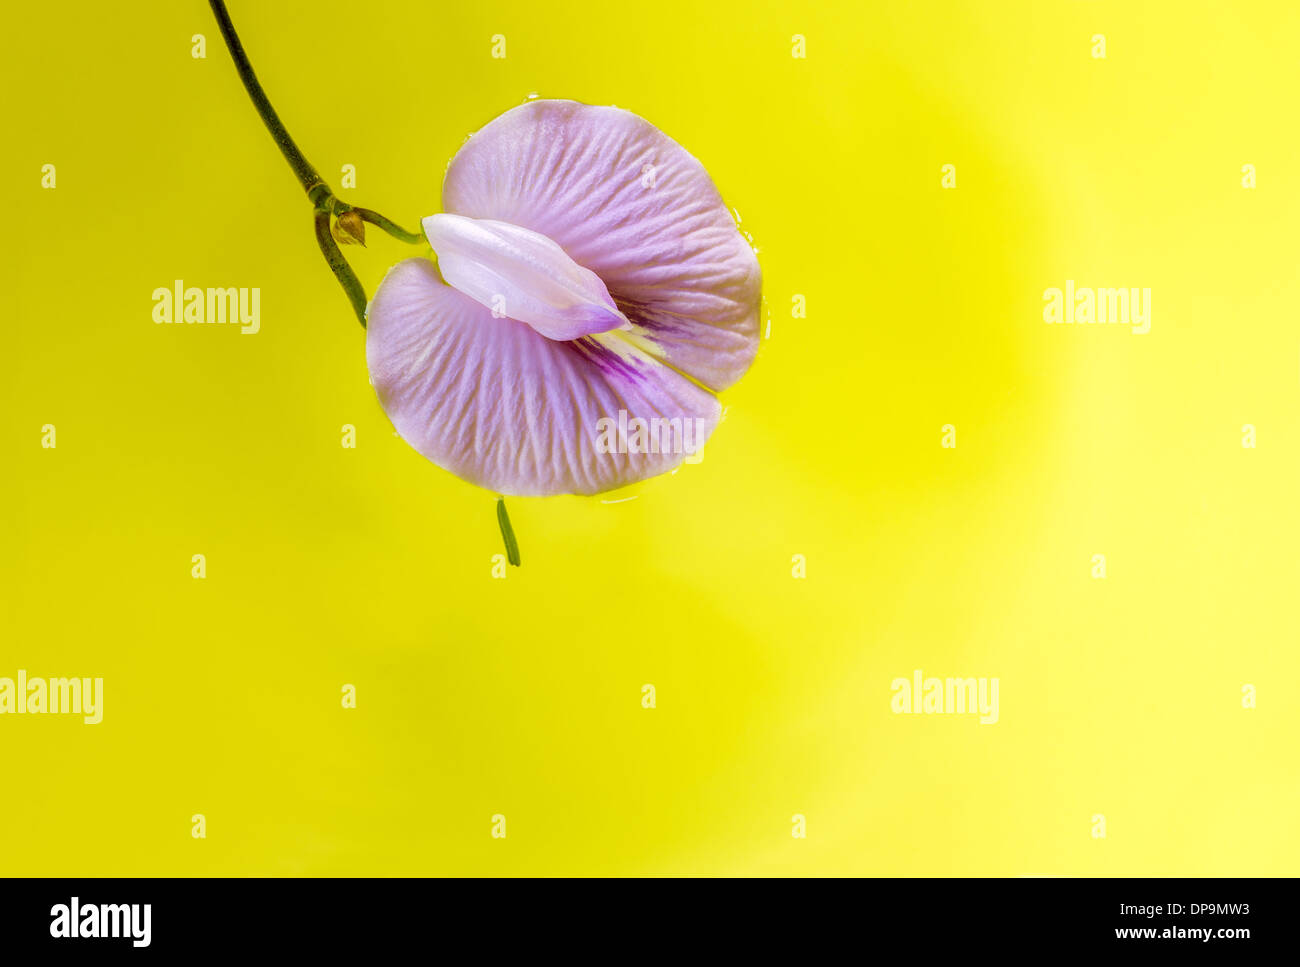 purple bean flower floating on vivid yellow background. Stock Photo